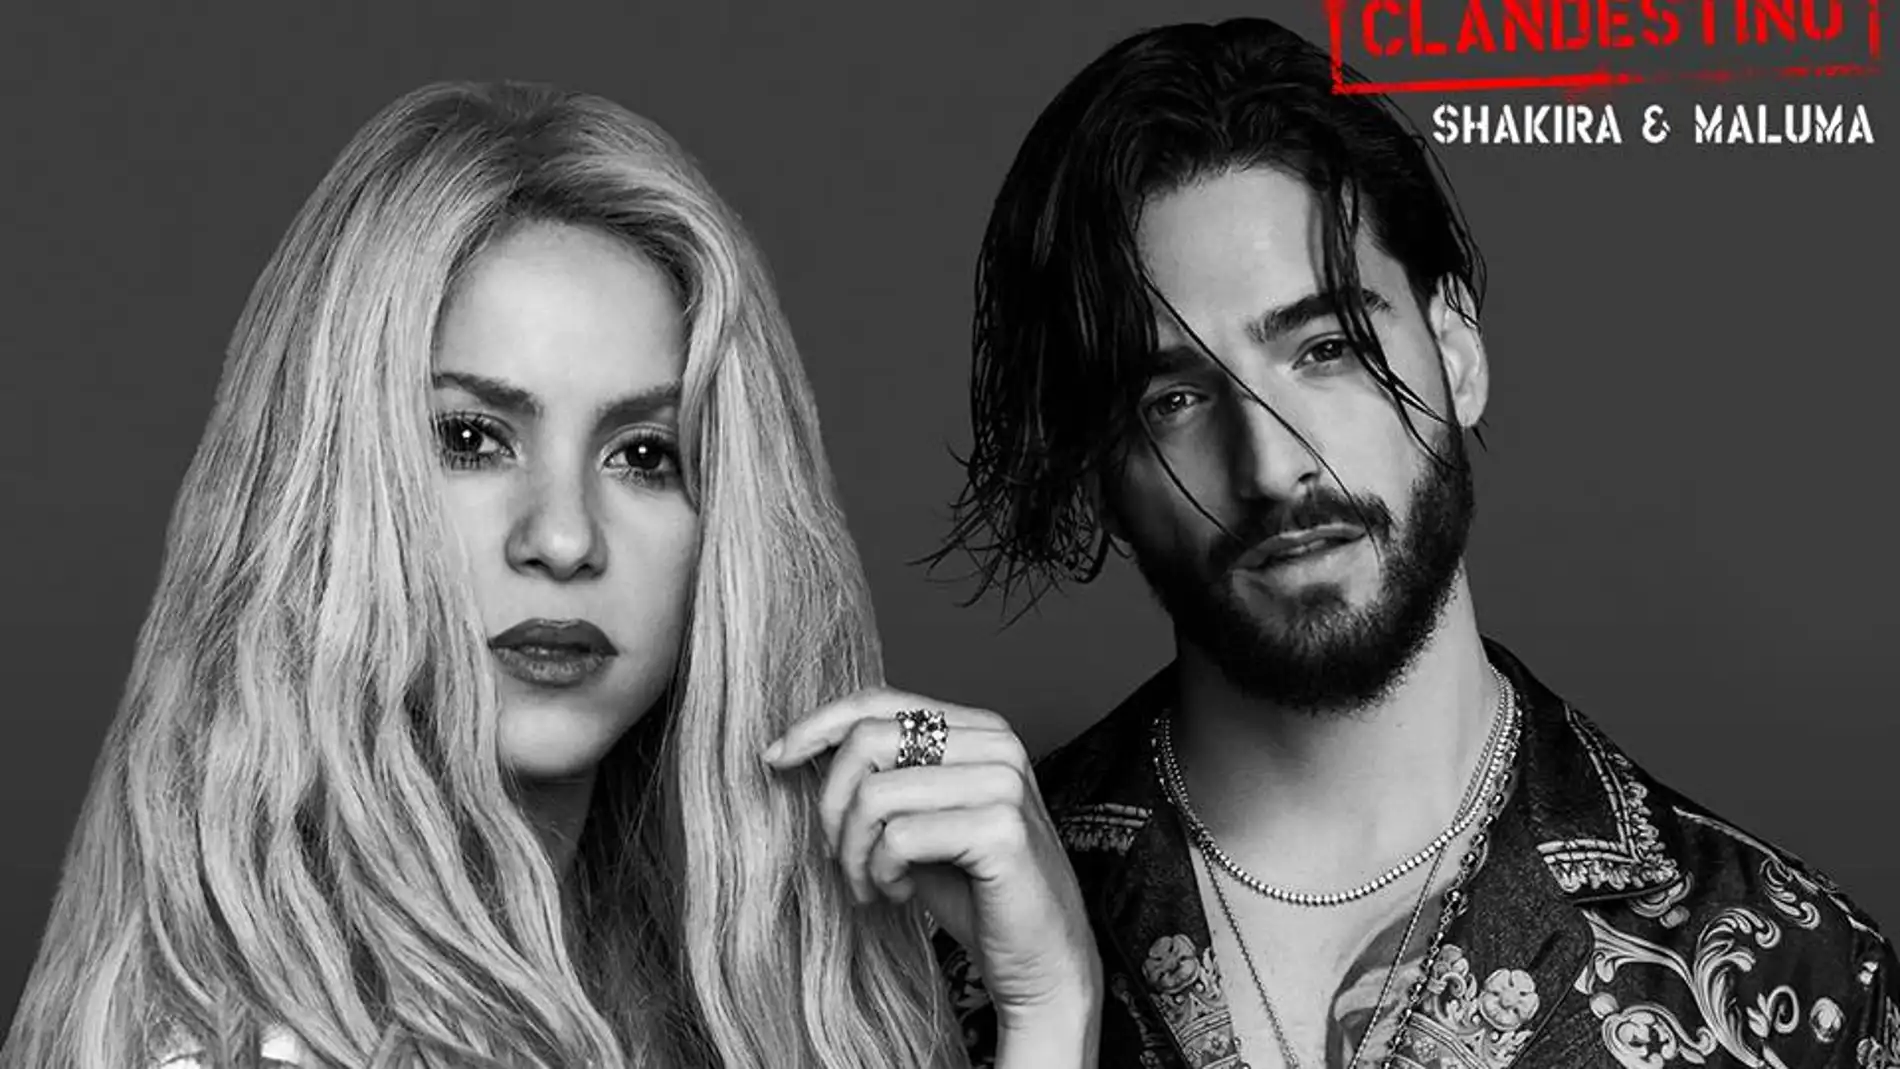 Shakira y Maluma presentan 'Clandestino'